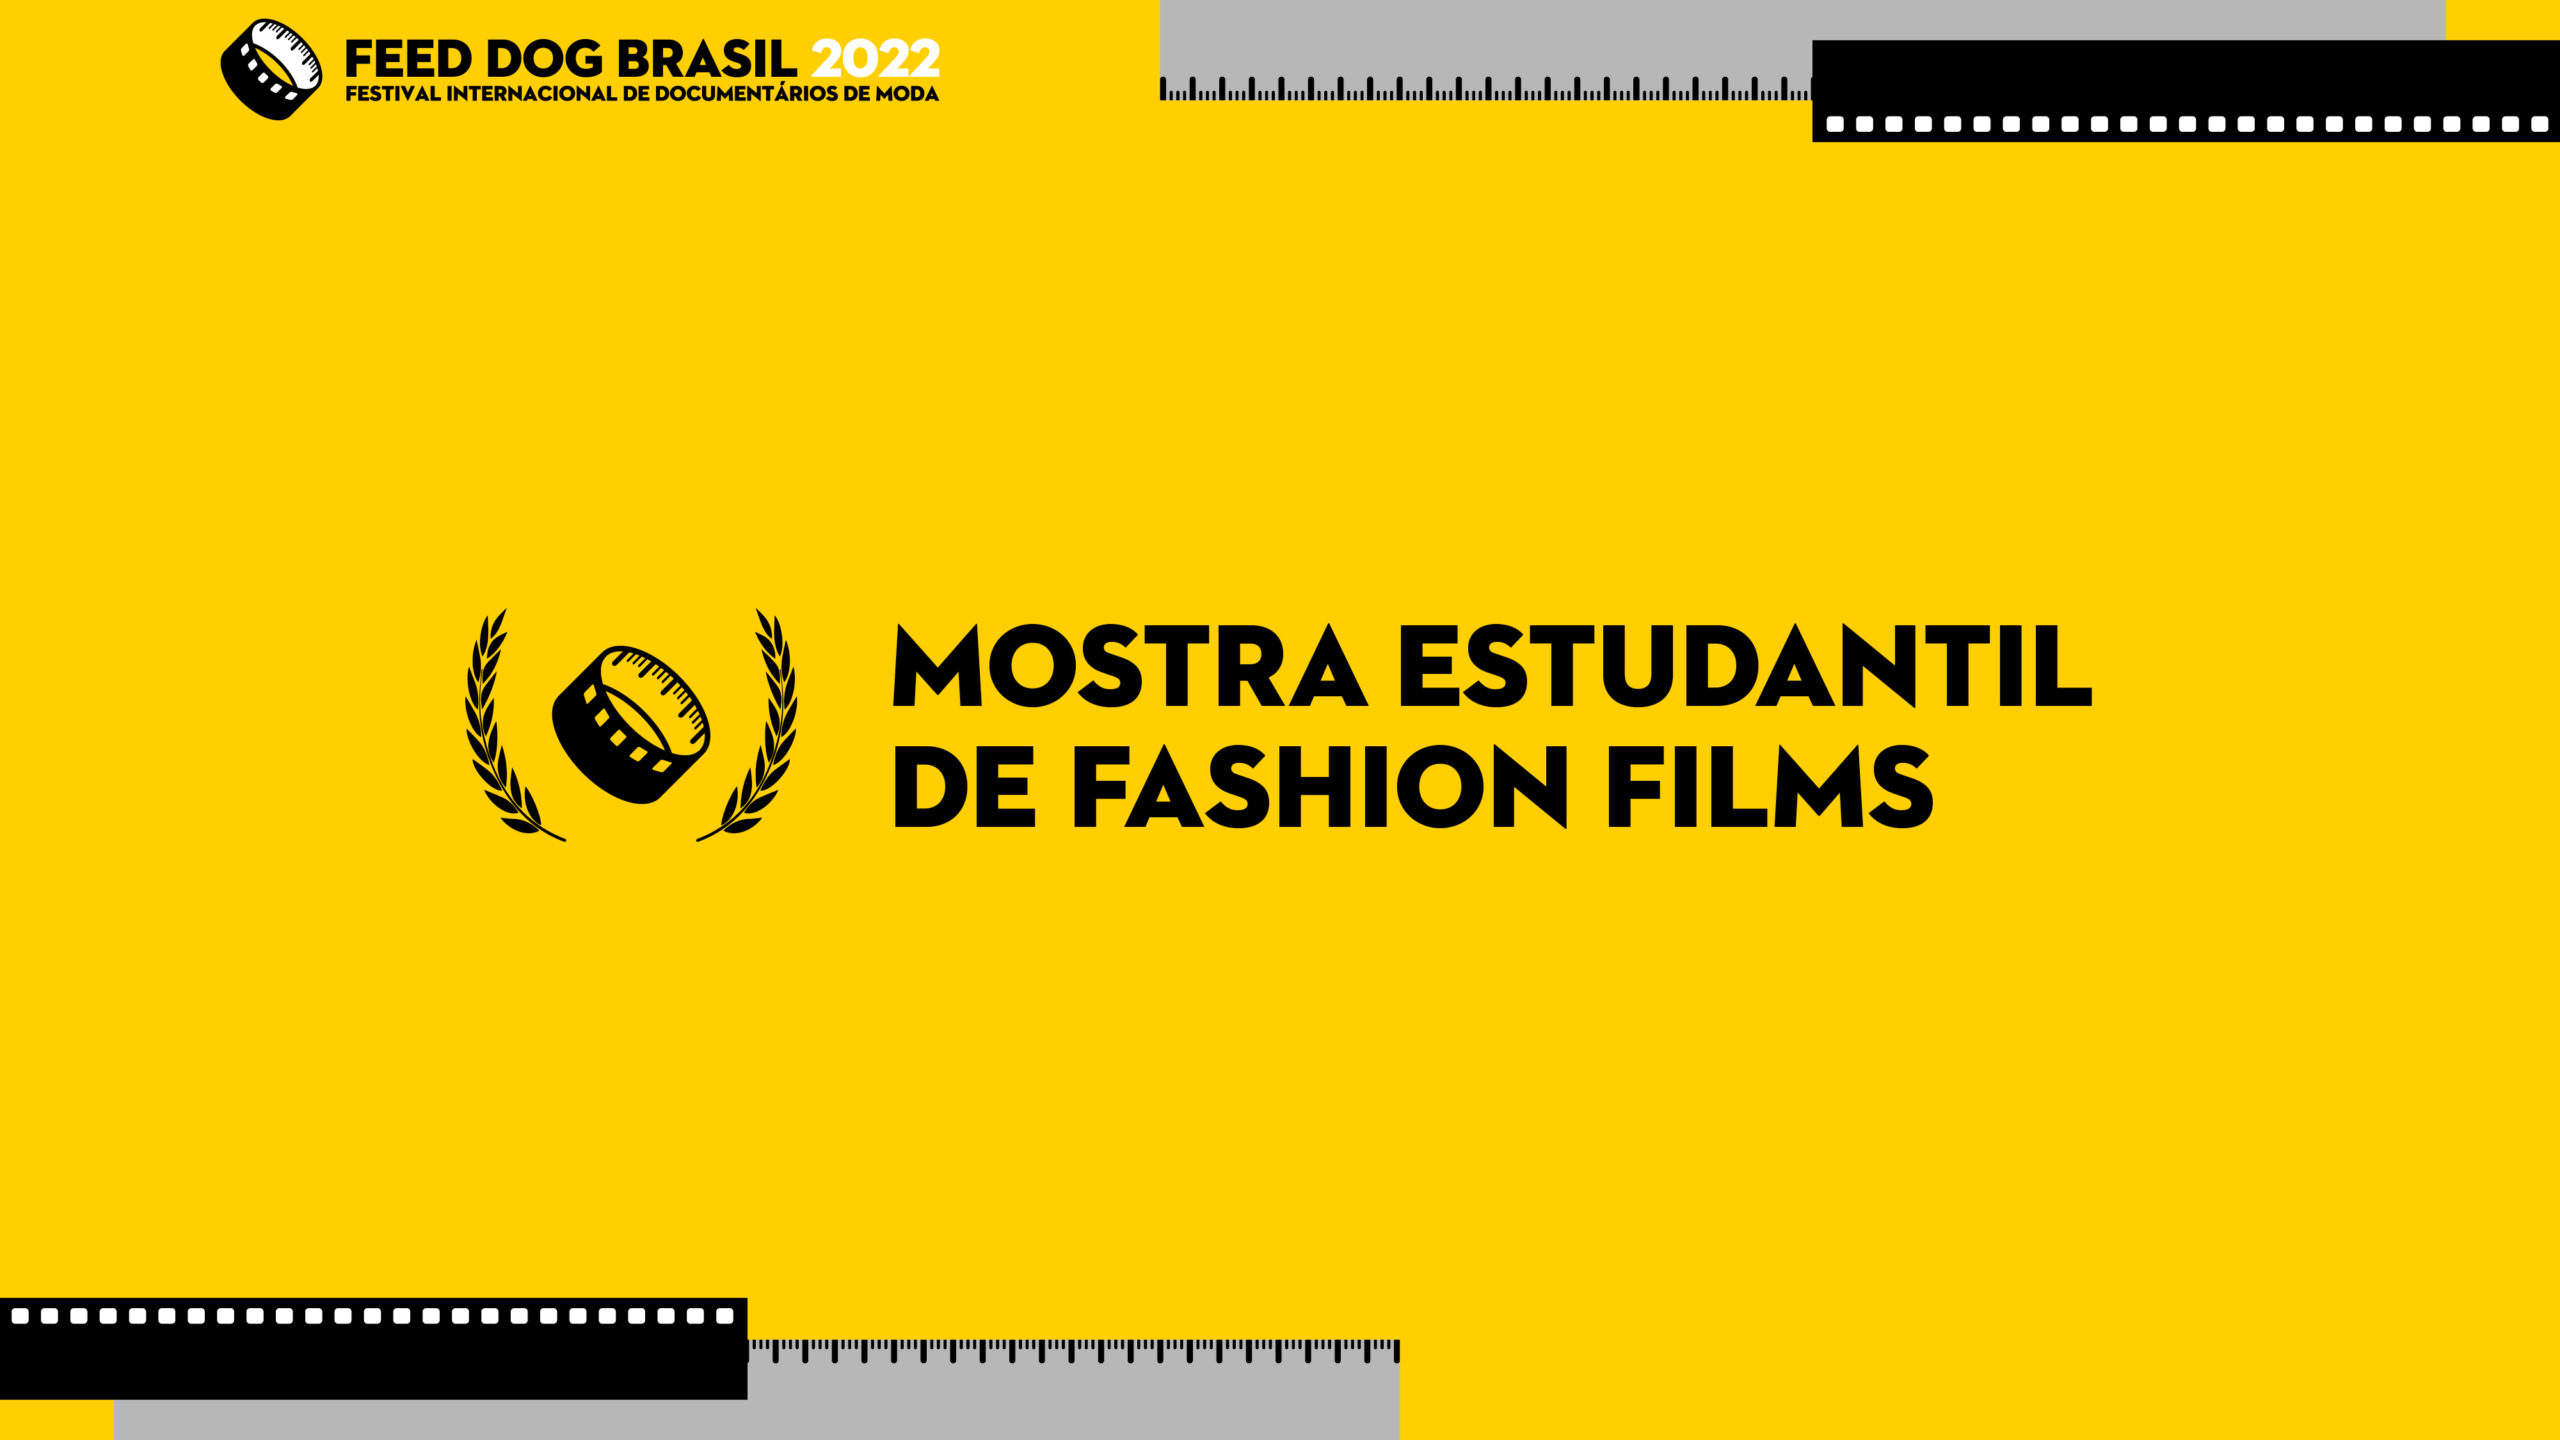 Feed Dog anuncia os títulos selecionados para a Mostra Estudantil de Fashion Films